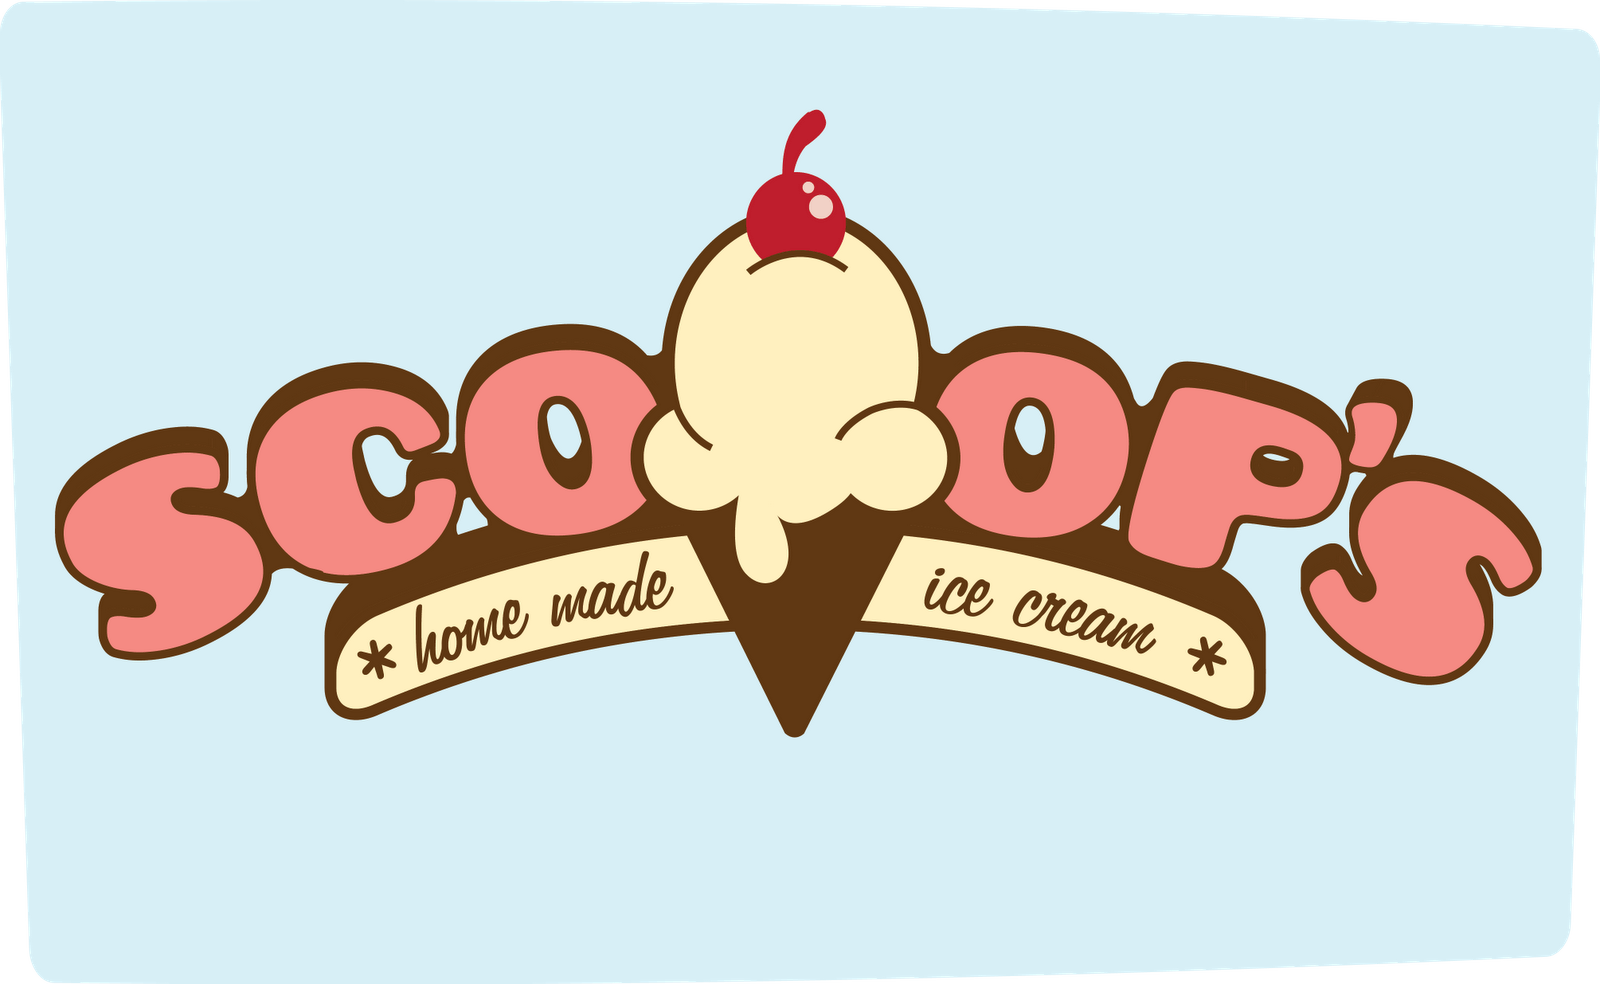 Scoops Ice Cream Logo - Brett Ferrin BFA Visual Communications Portfolio: Scoop's Home Made ...